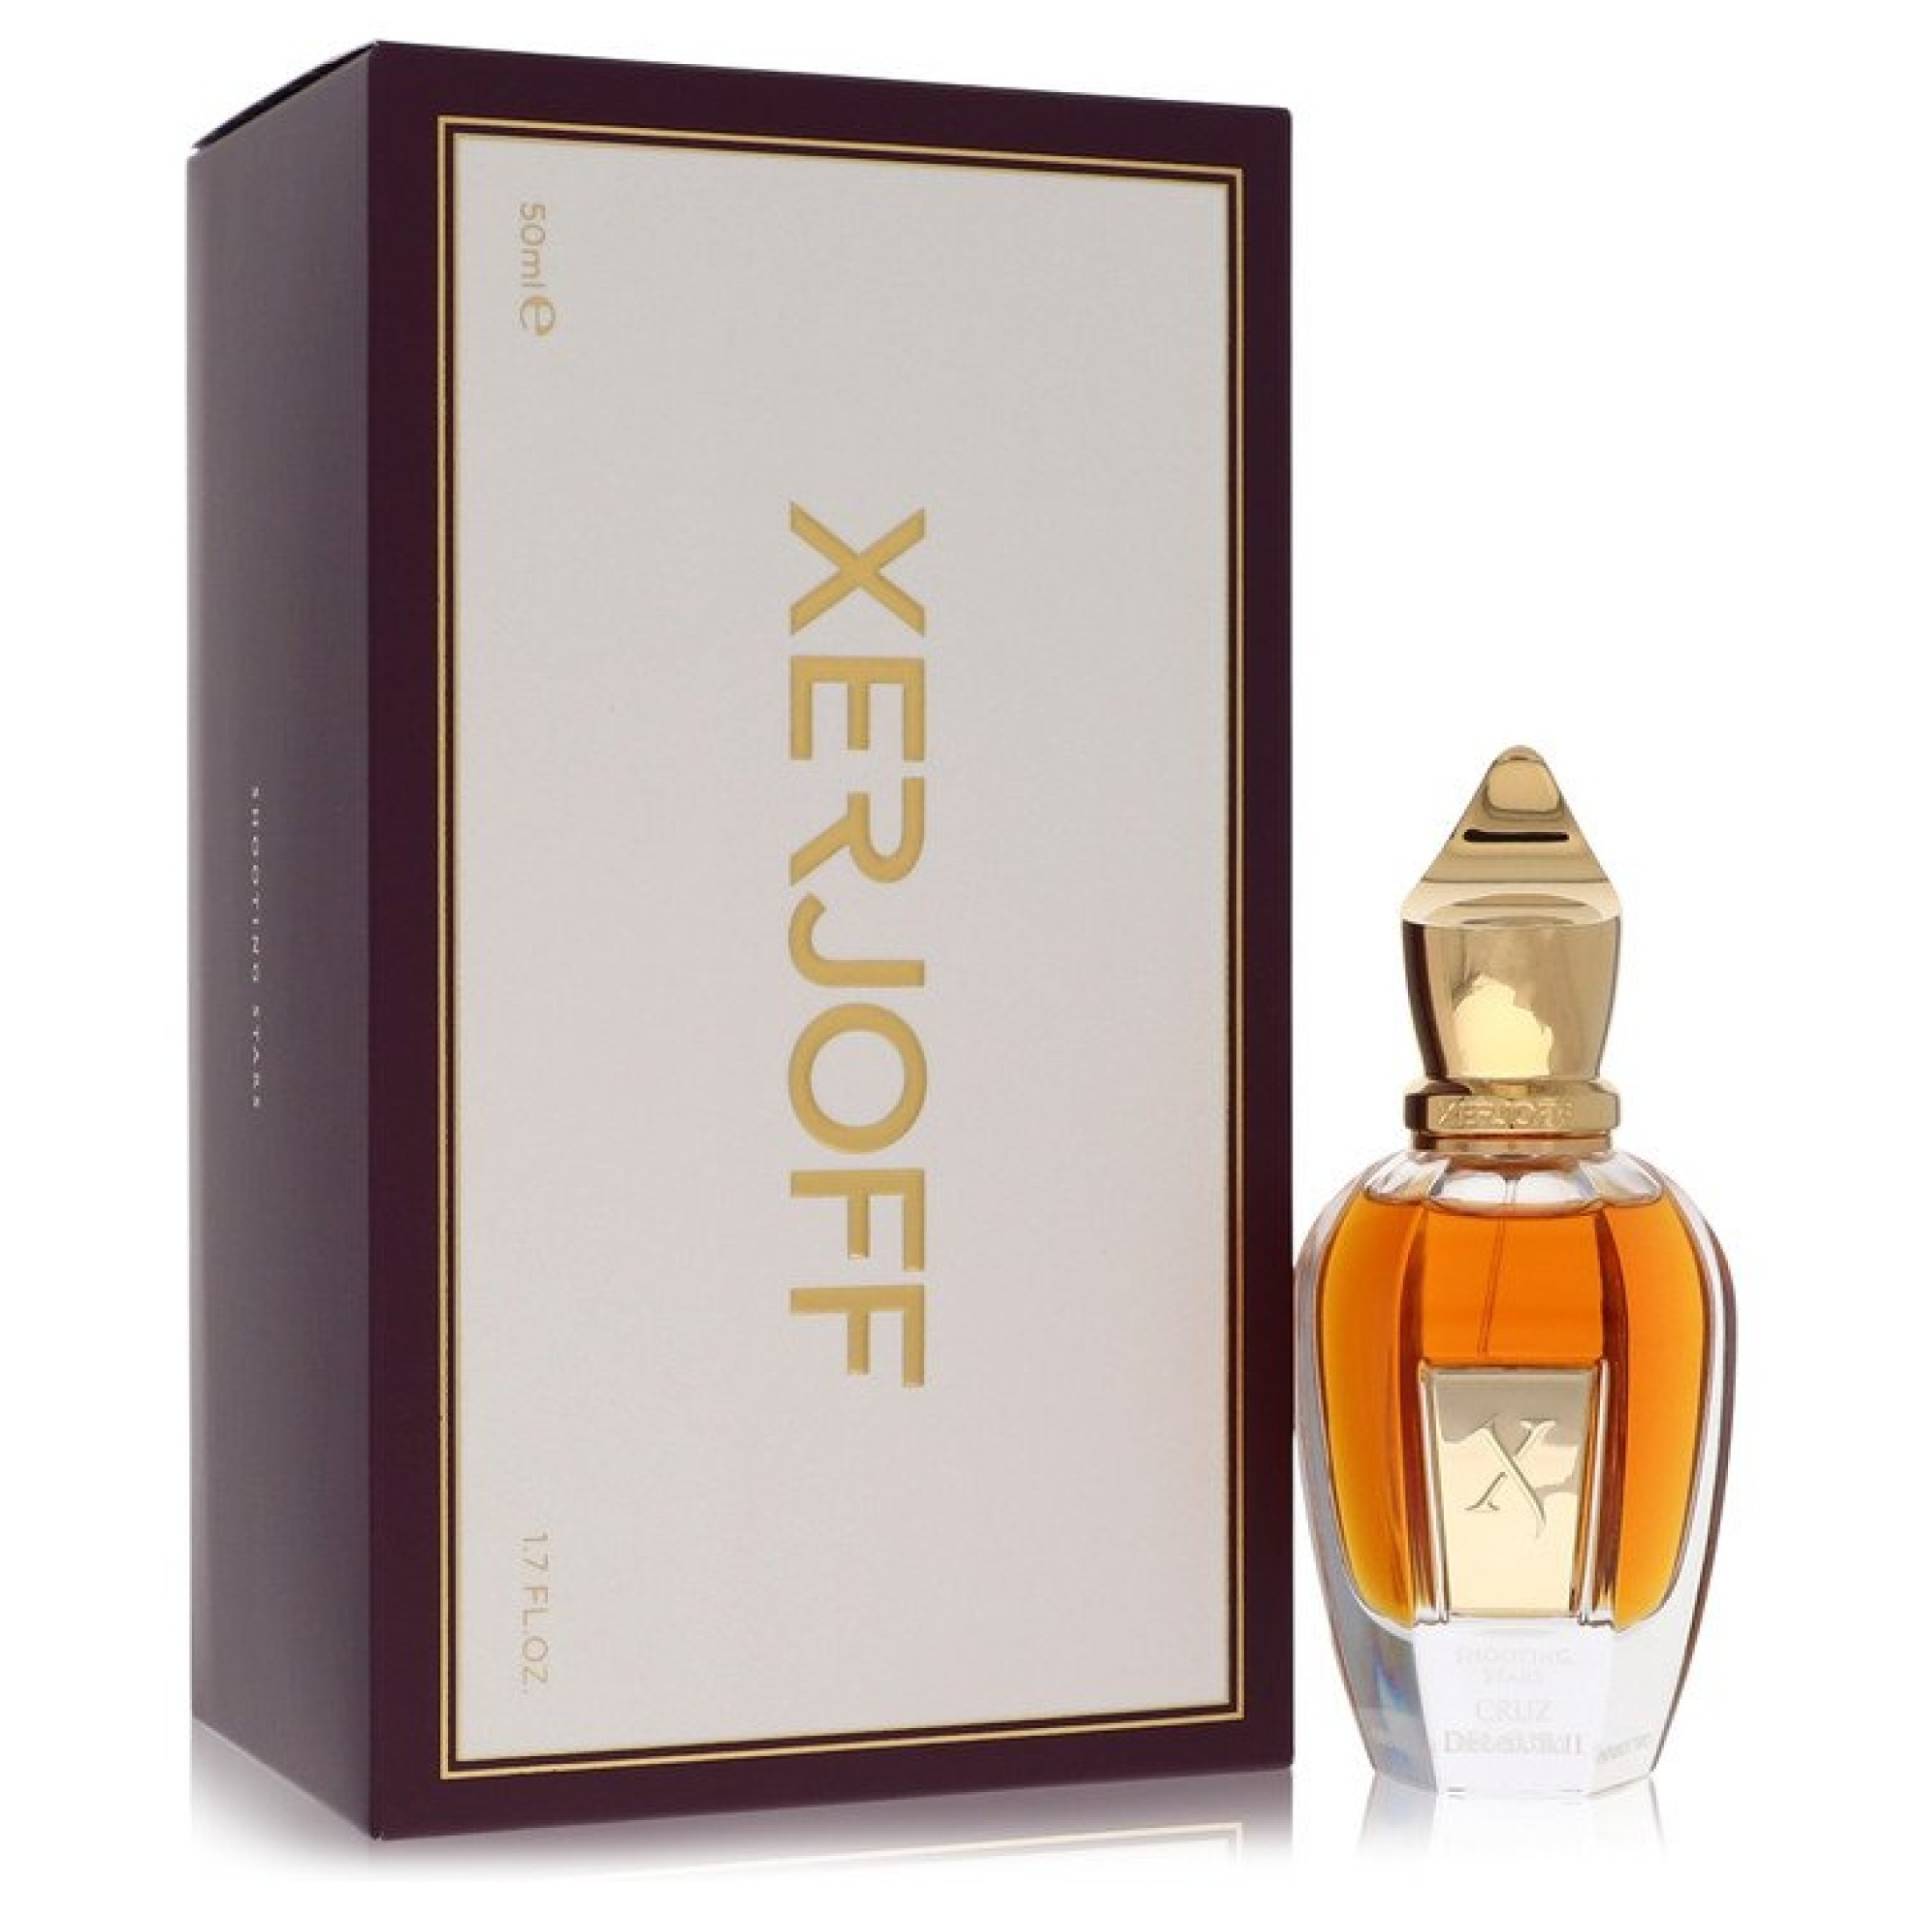 Xerjoff Cruz Del Sur II Eau De Parfum Spray (Unisex) 50 ml von Xerjoff